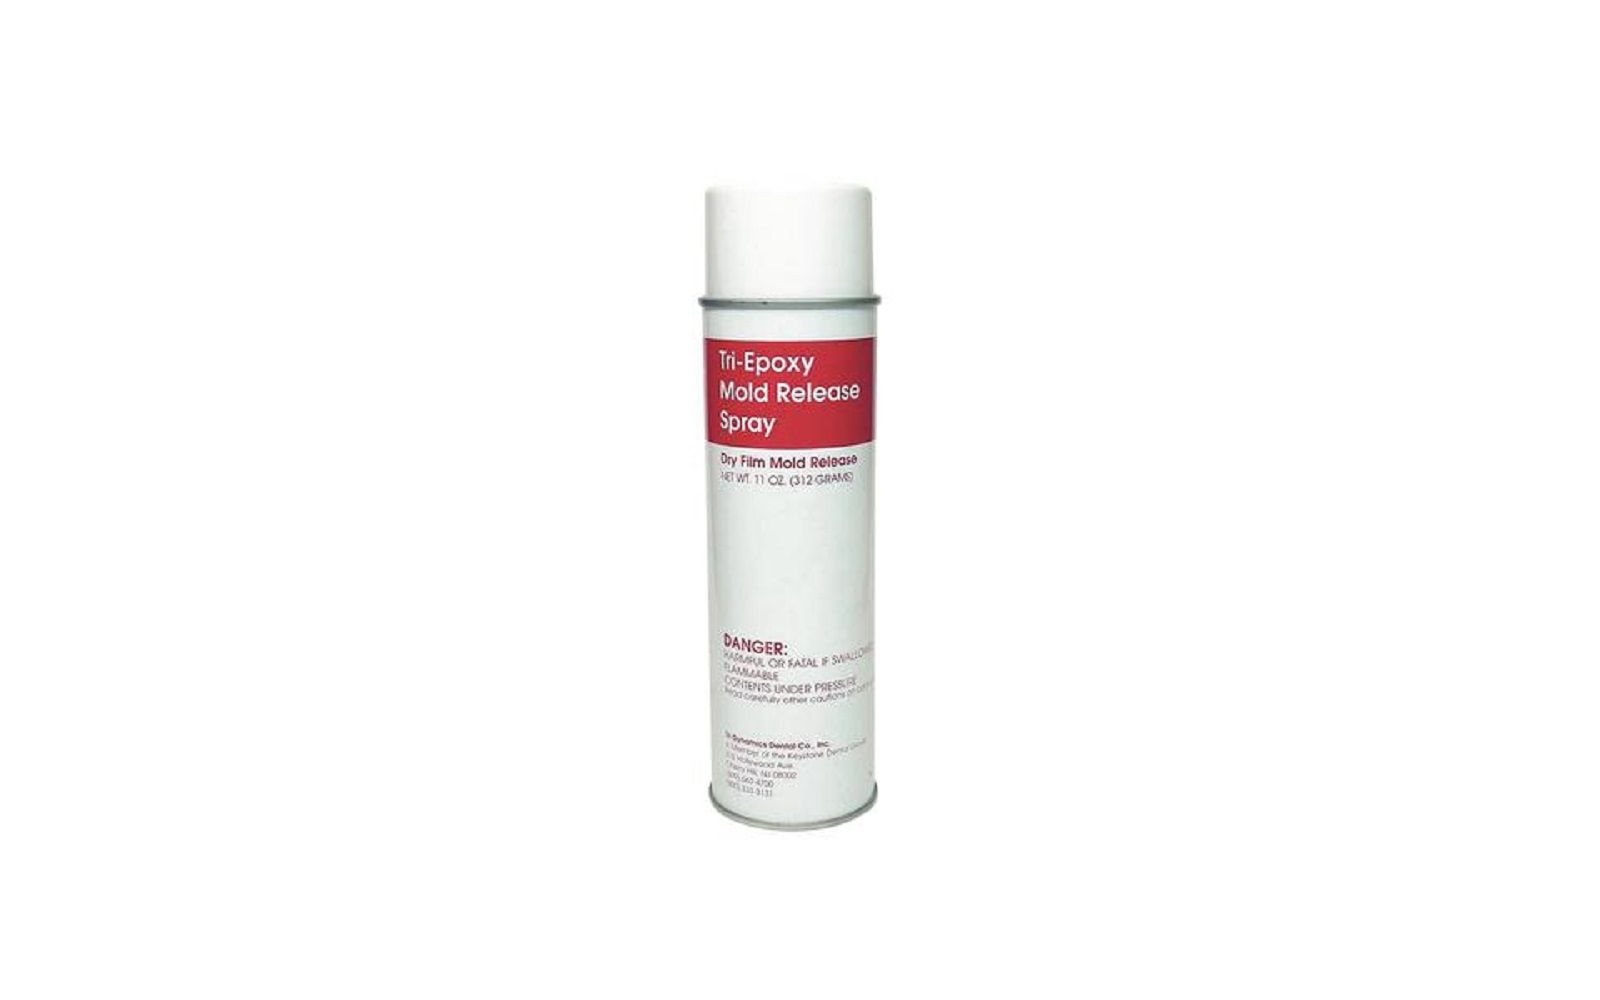 Tri-epoxy mold release spray, 11 oz